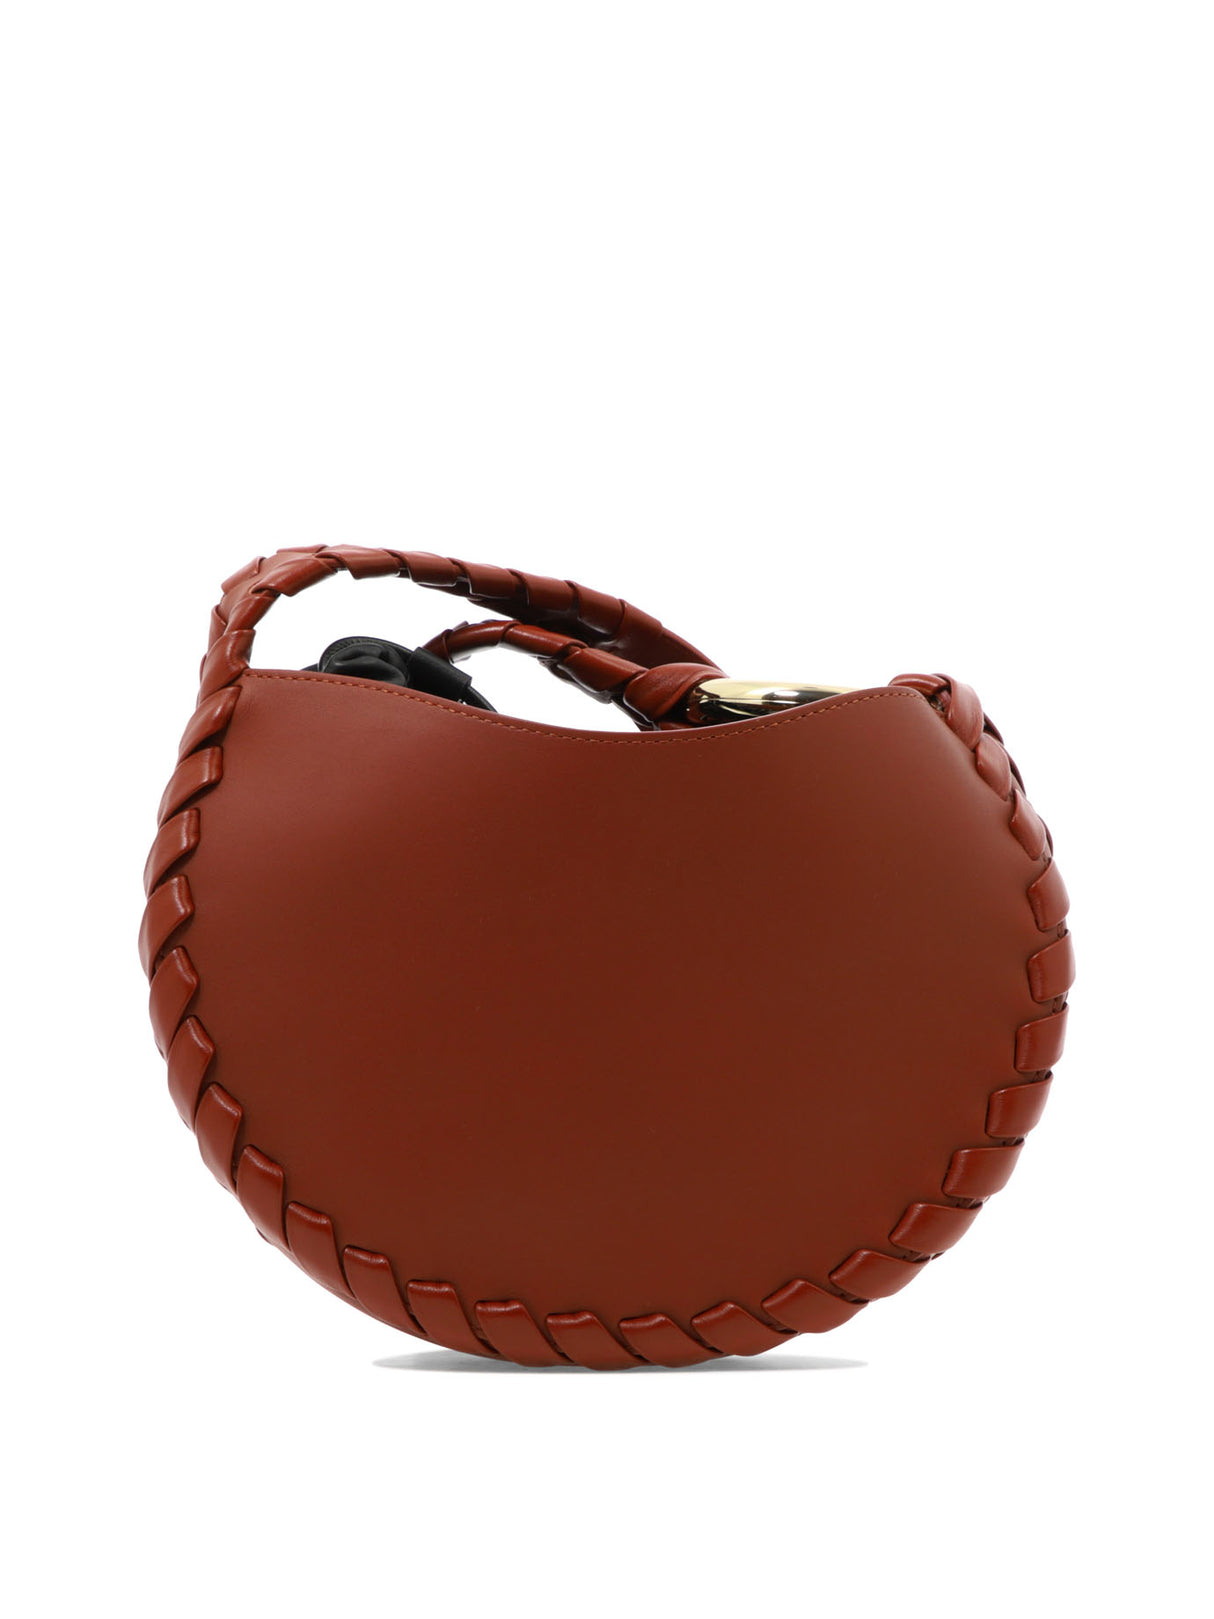 CHLOÉ Purple Leather Crossbody Handbag for Women - FW22 Collection